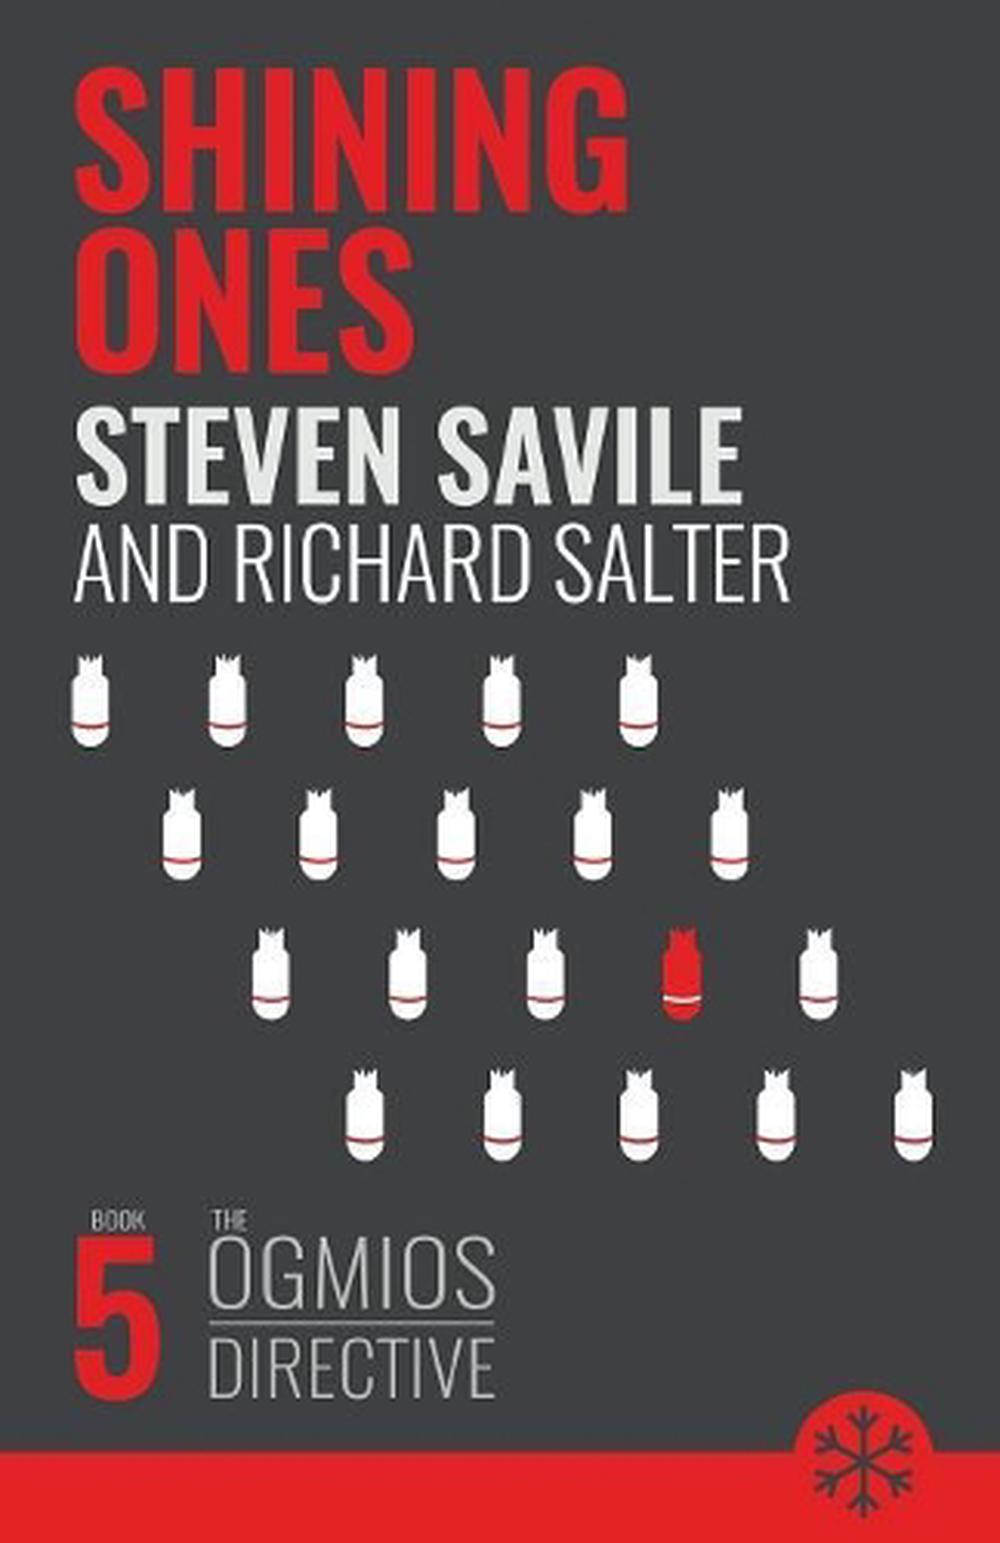 Shining Ones by Steven Savile, Paperback, 9781911390268 Buy online at